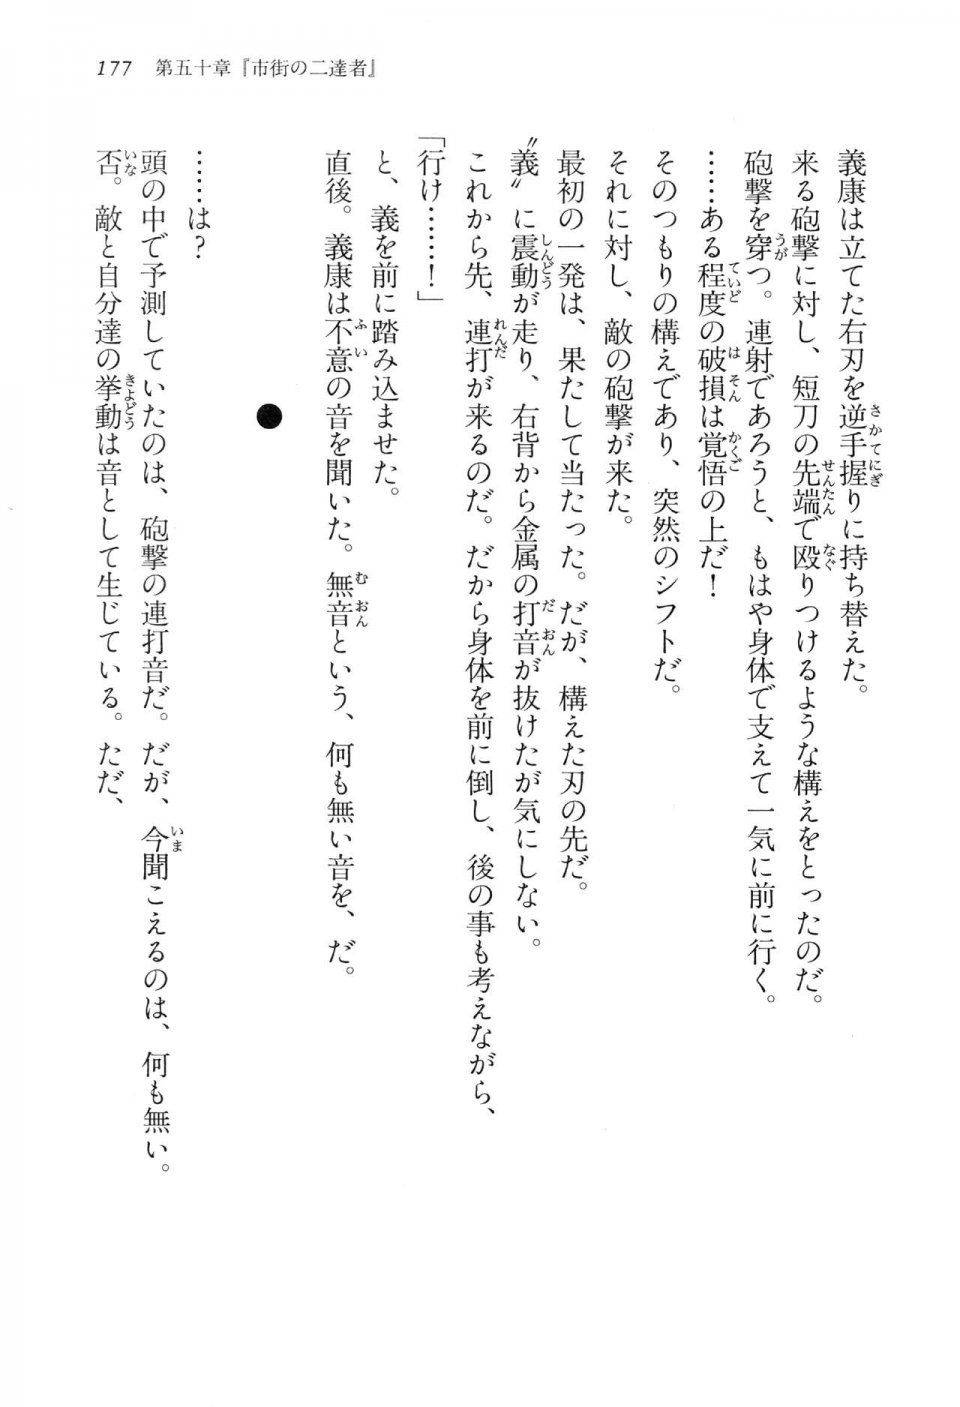 Kyoukai Senjou no Horizon LN Vol 15(6C) Part 1 - Photo #177